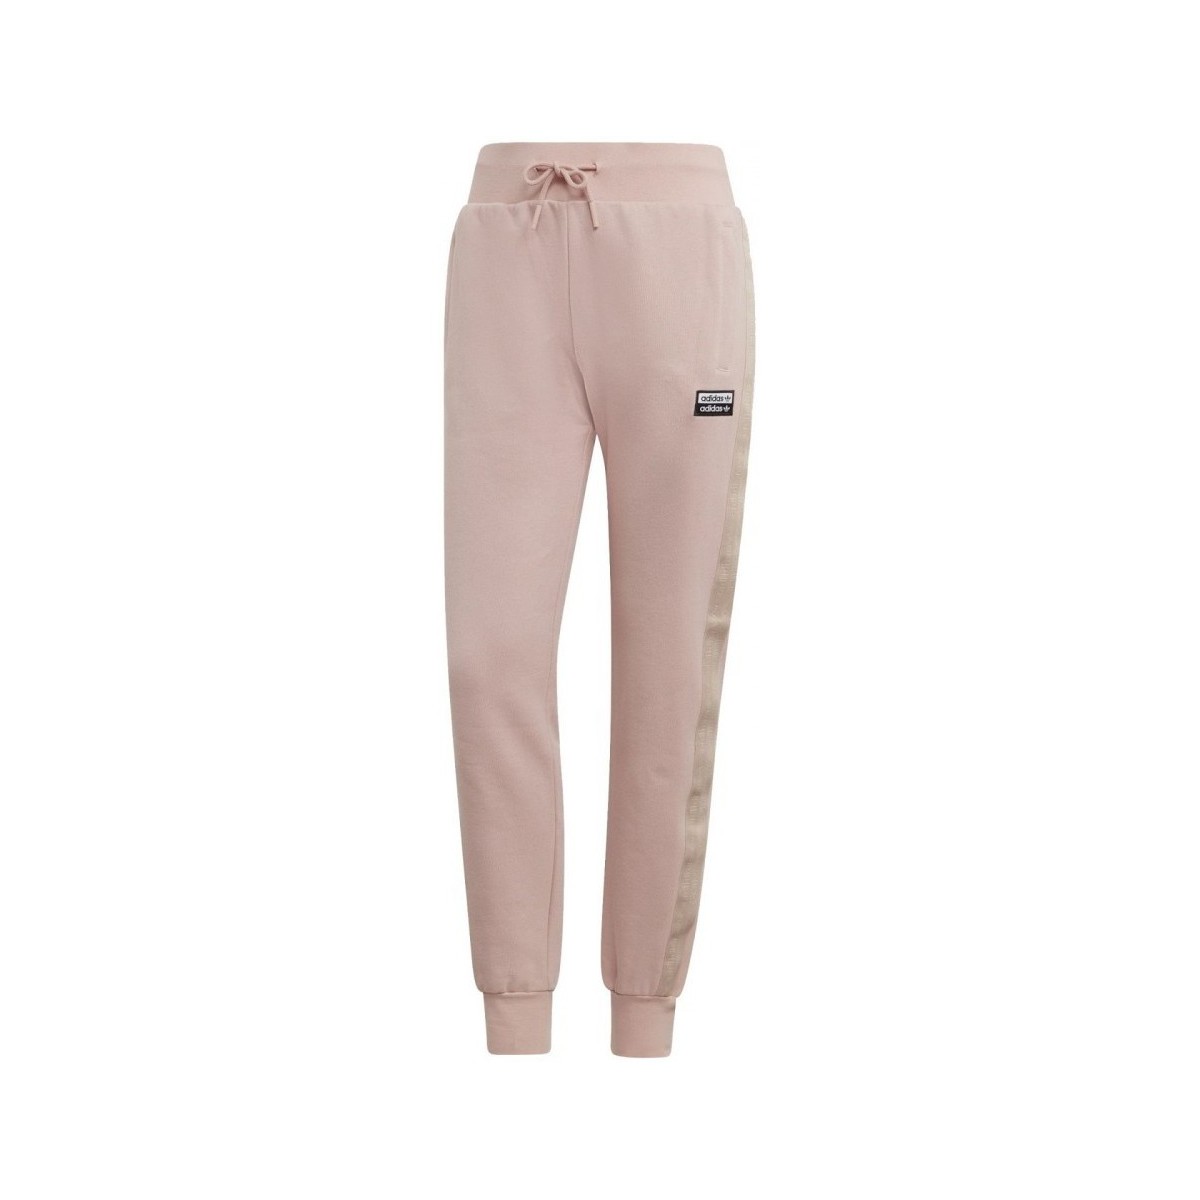 adidas Originals Rose Cuffed Pants 39Ev7Q4A